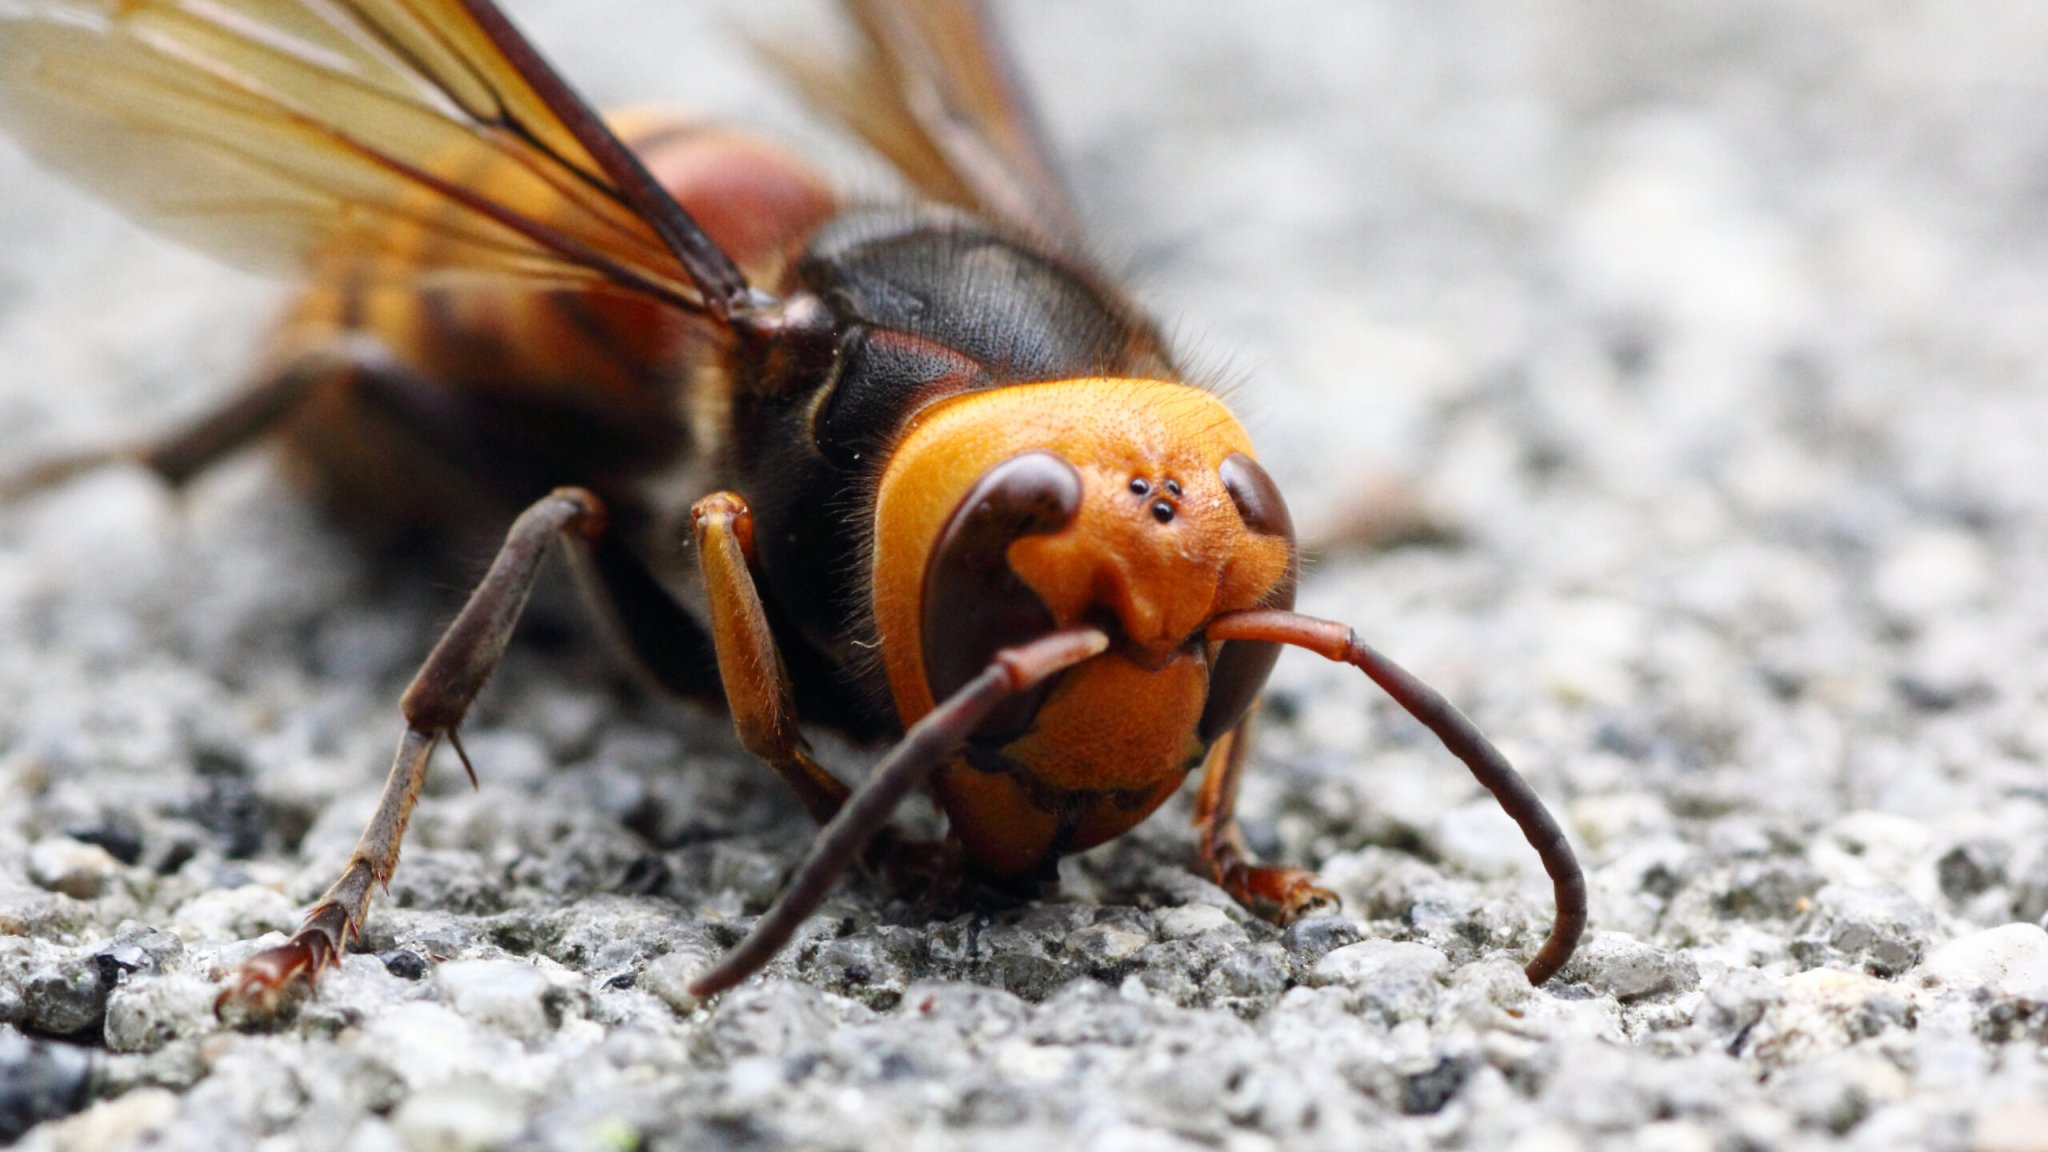 Giant Murder Hornets Are Entering The Slaughter Phase